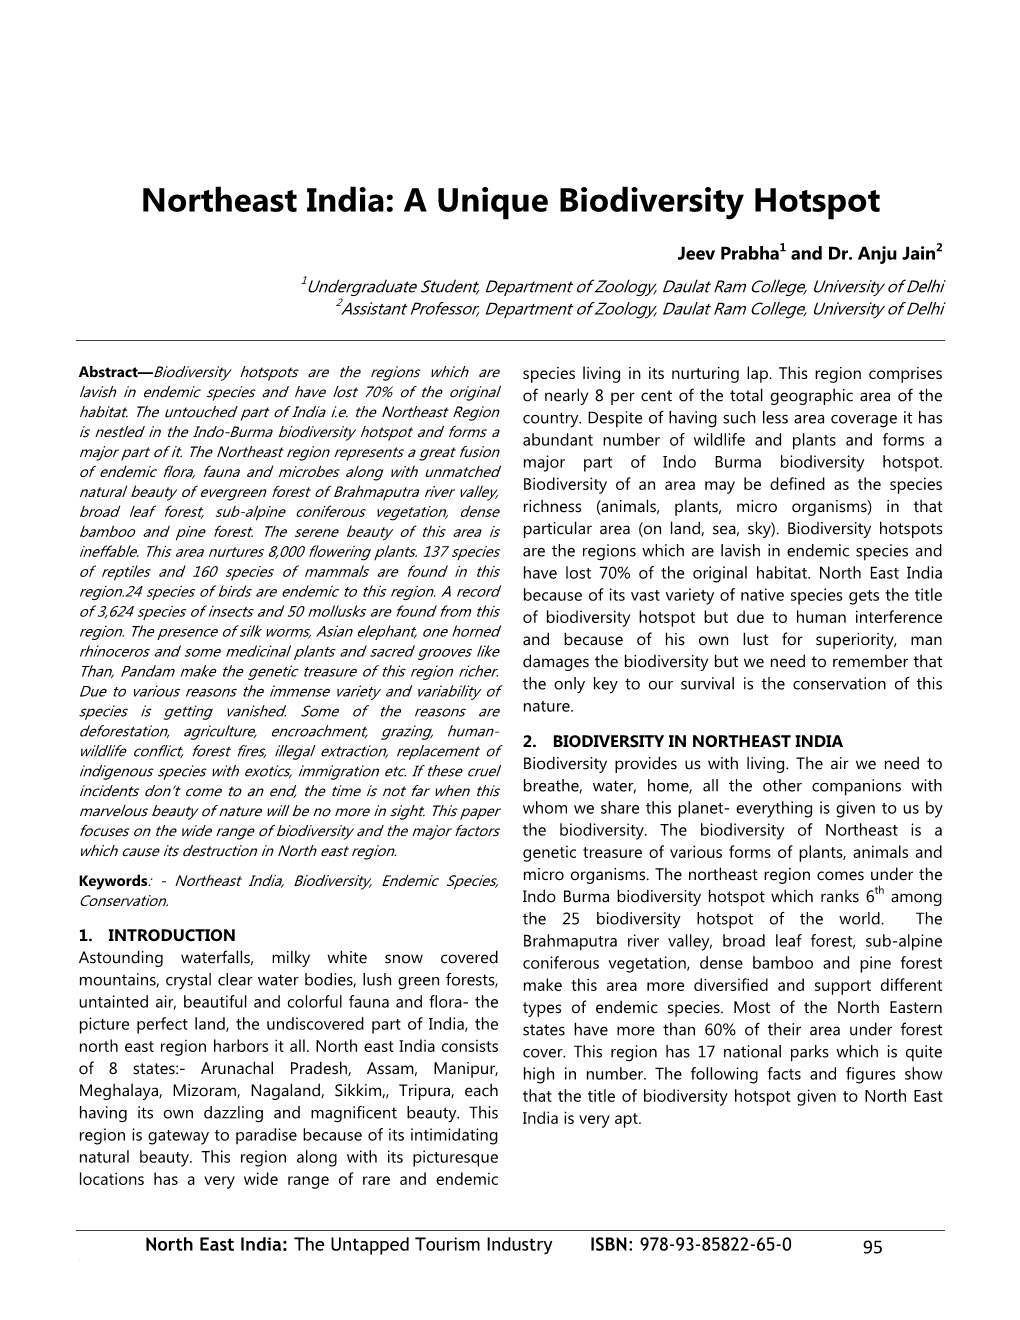 Northeast India: a Unique Biodiversity Hotspot